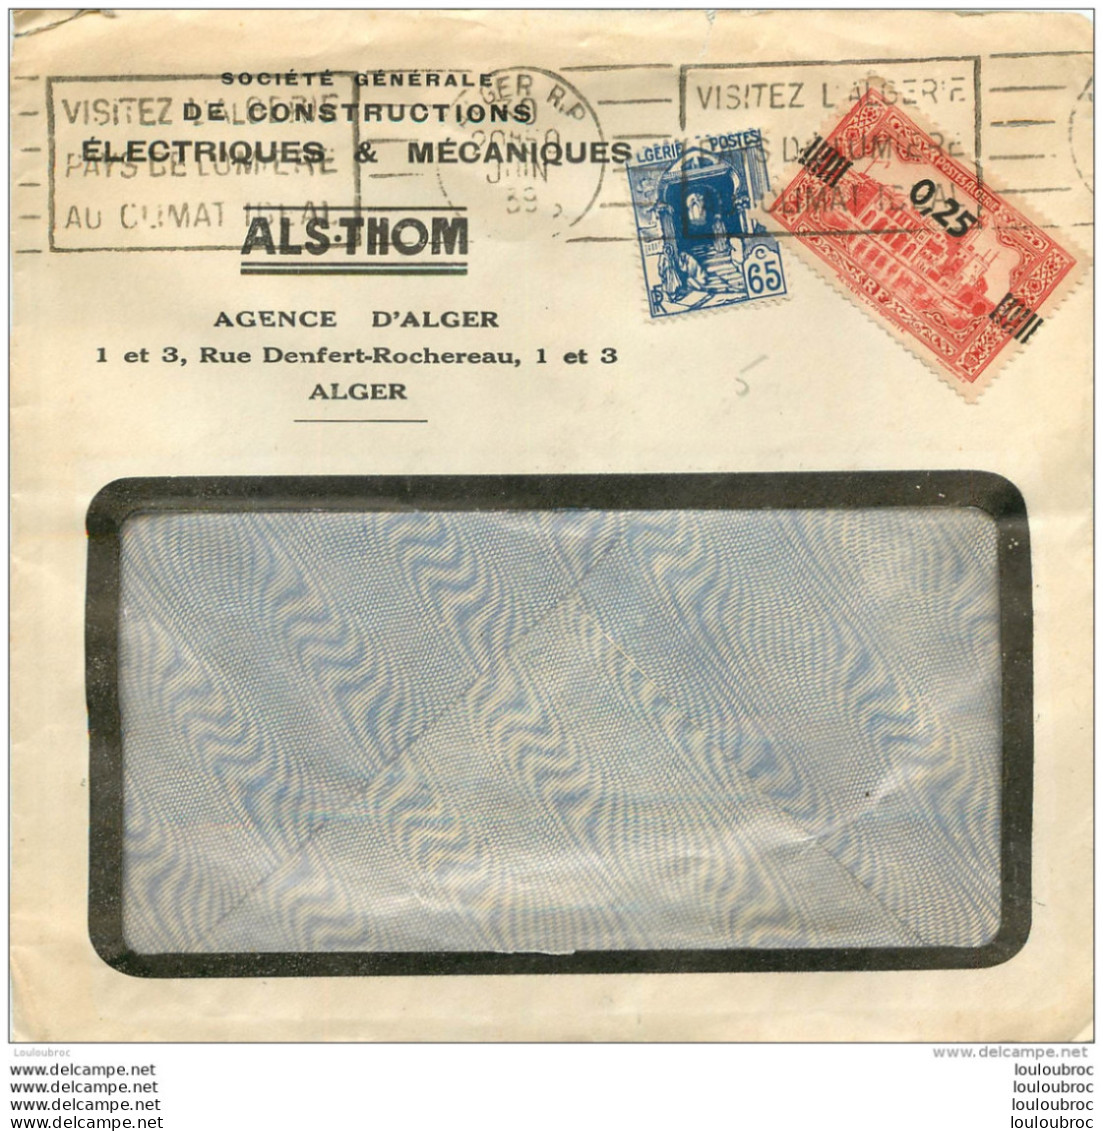 ENVELOPPE  1939 ALS.THOM AGENCE D'ALGER - Usati